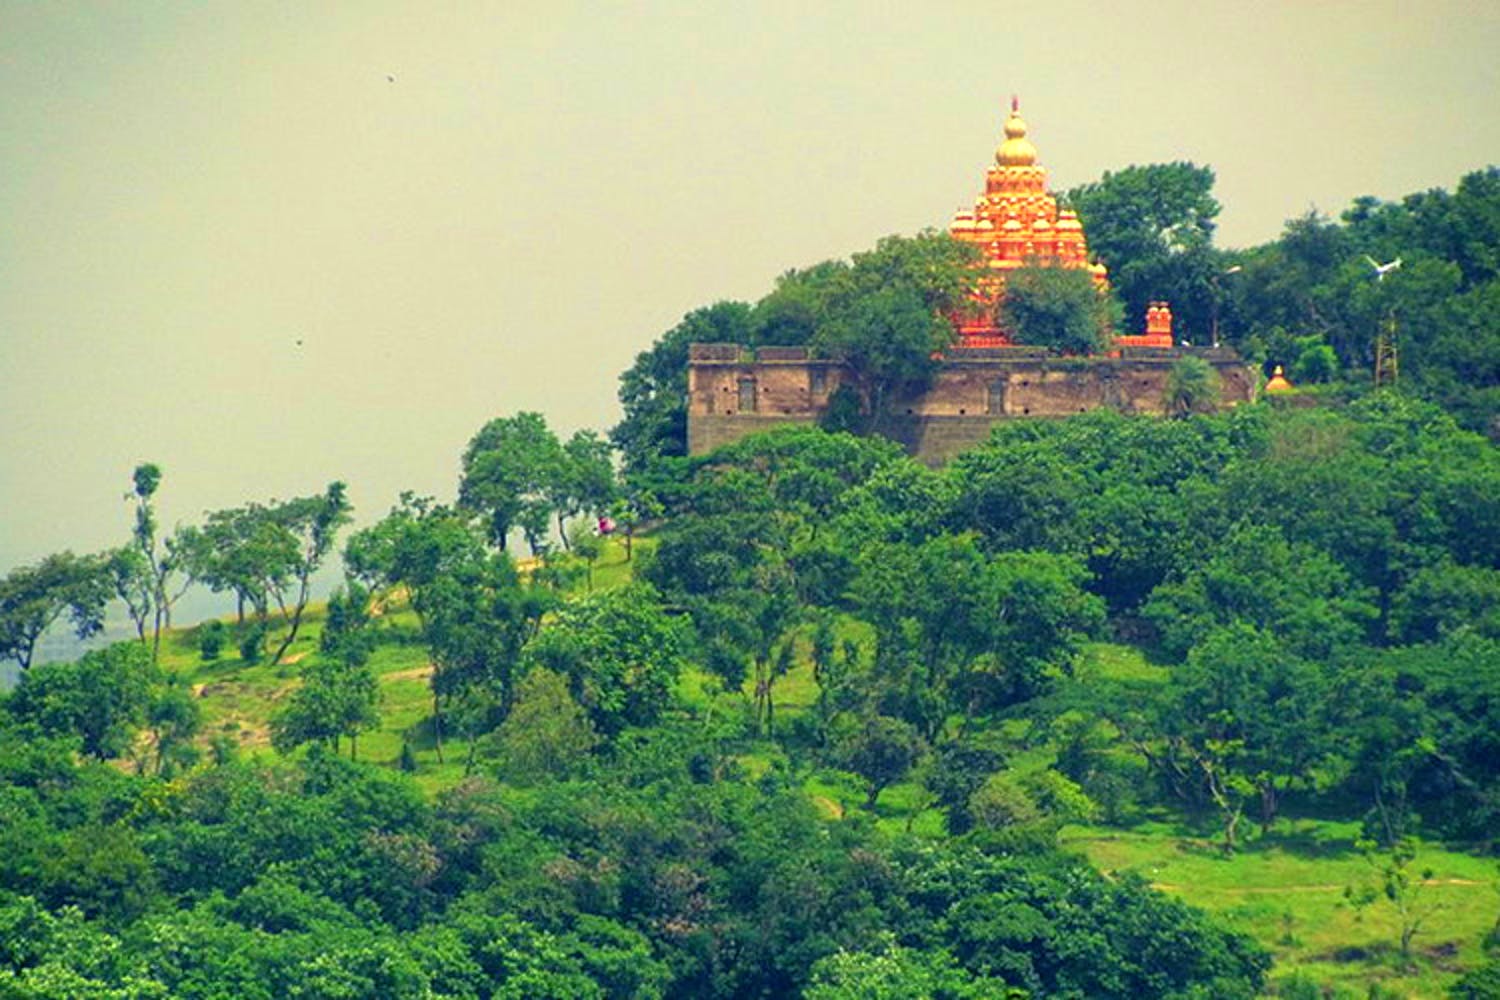 Vegetation,Green,Nature,Hill station,Sky,Landmark,Natural landscape,Pagoda,Historic site,Temple